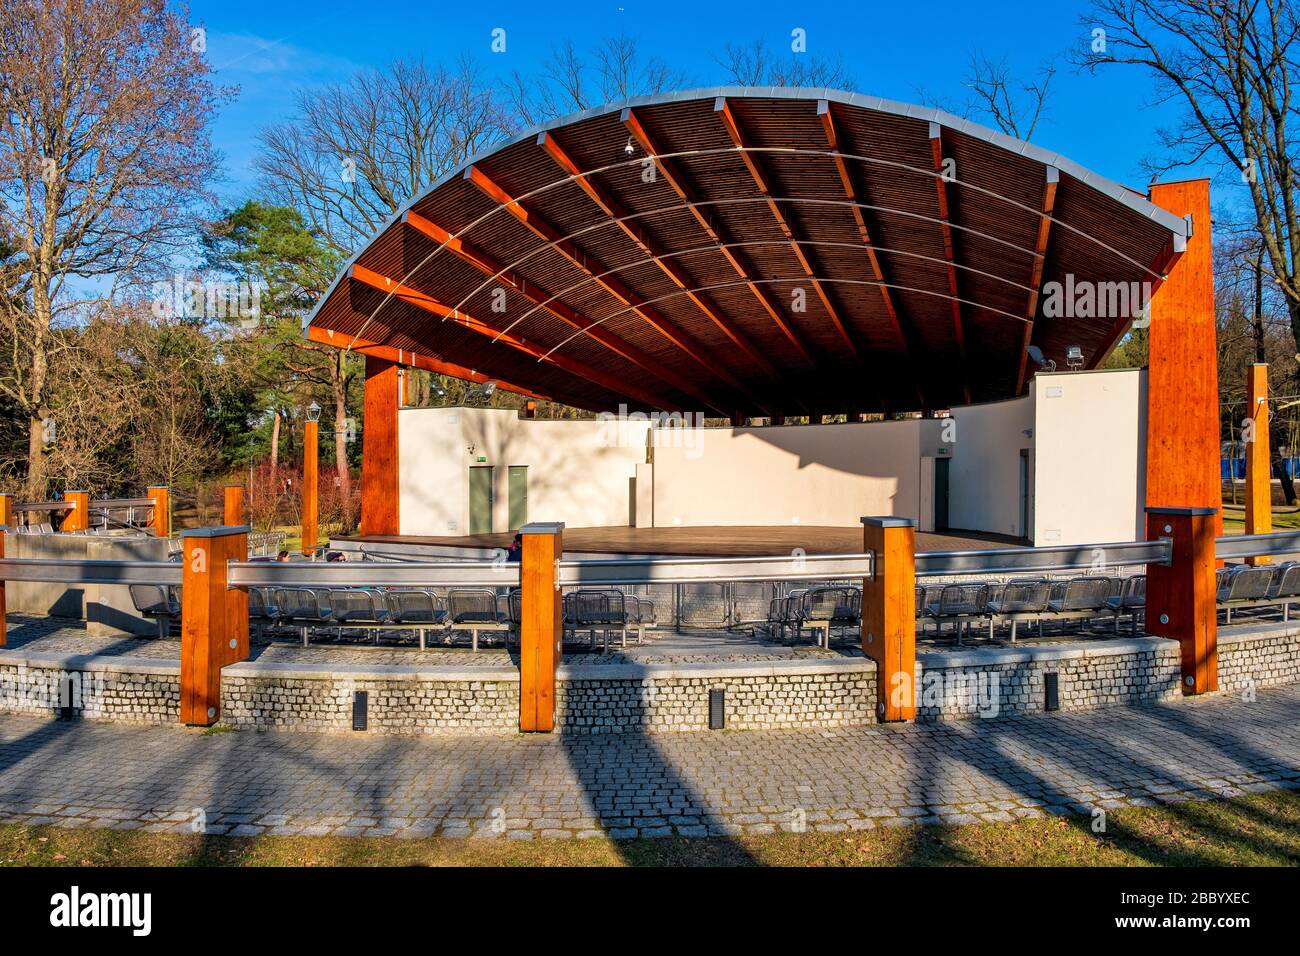 Konstancin-Jeziorna, Mazovia / Poland - 2019/03/23: Reconstructed historic open amphitheater in Konstancin-Jeziorna Springs Park - Park Zdrojowy Stock Photo